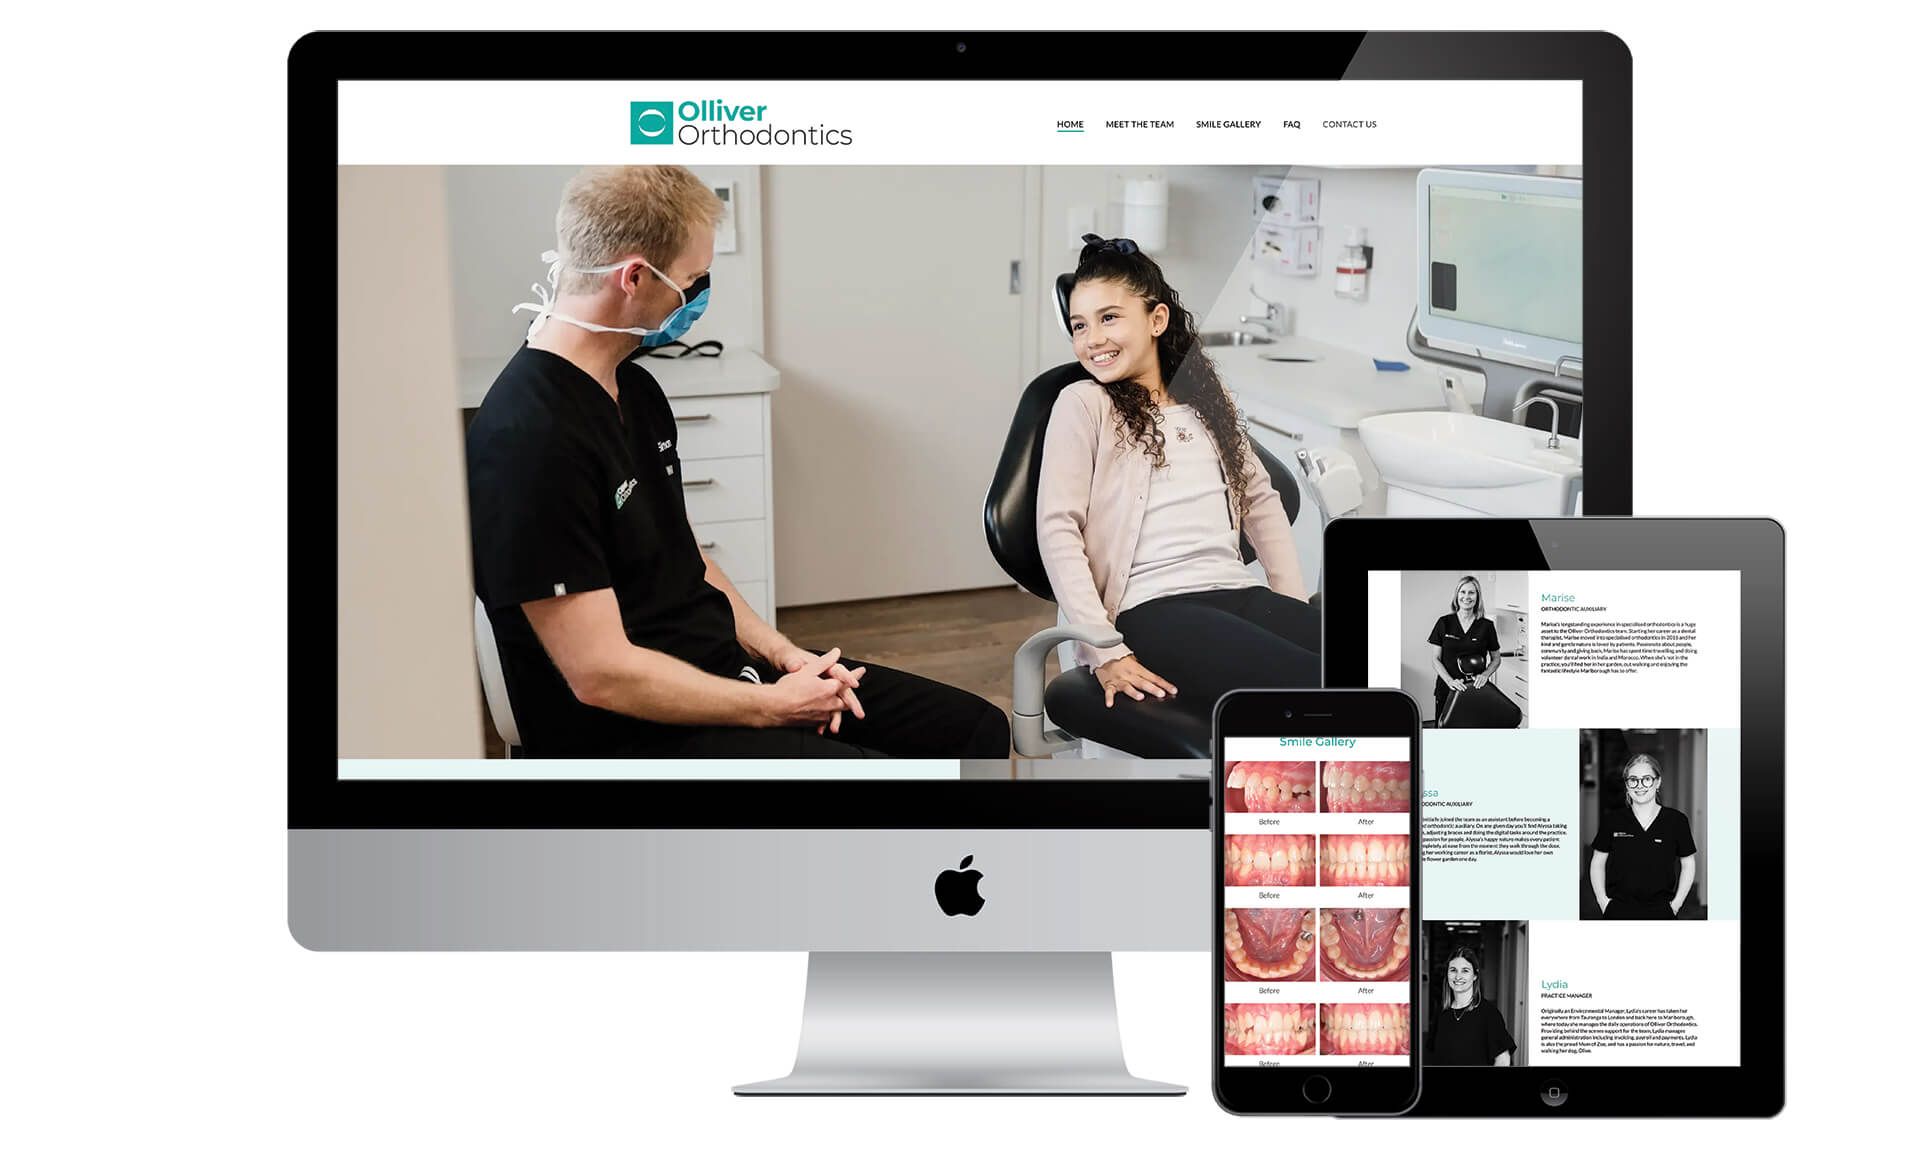 Olliver Orthodontics website designed by Vanilla Hayes creative graphic design  studio in Blenheim, Marlborough, New Zealand